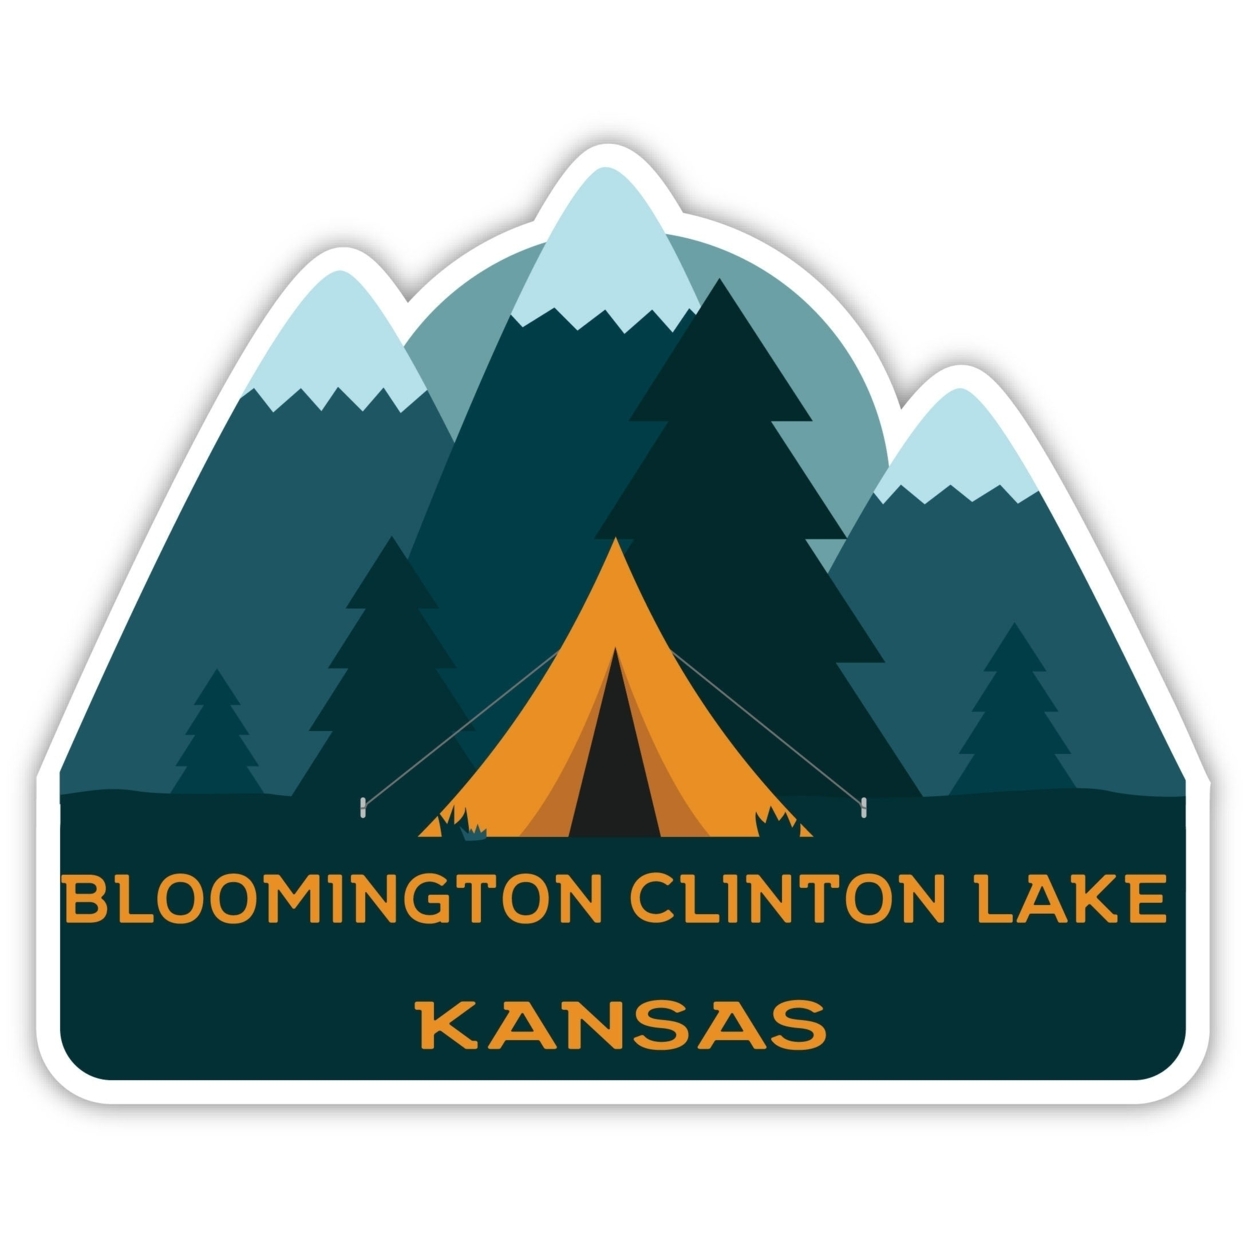 Bloomington Clinton Lake Kansas Souvenir Decorative Stickers (Choose Theme And Size) - 4-Pack, 6-Inch, Tent